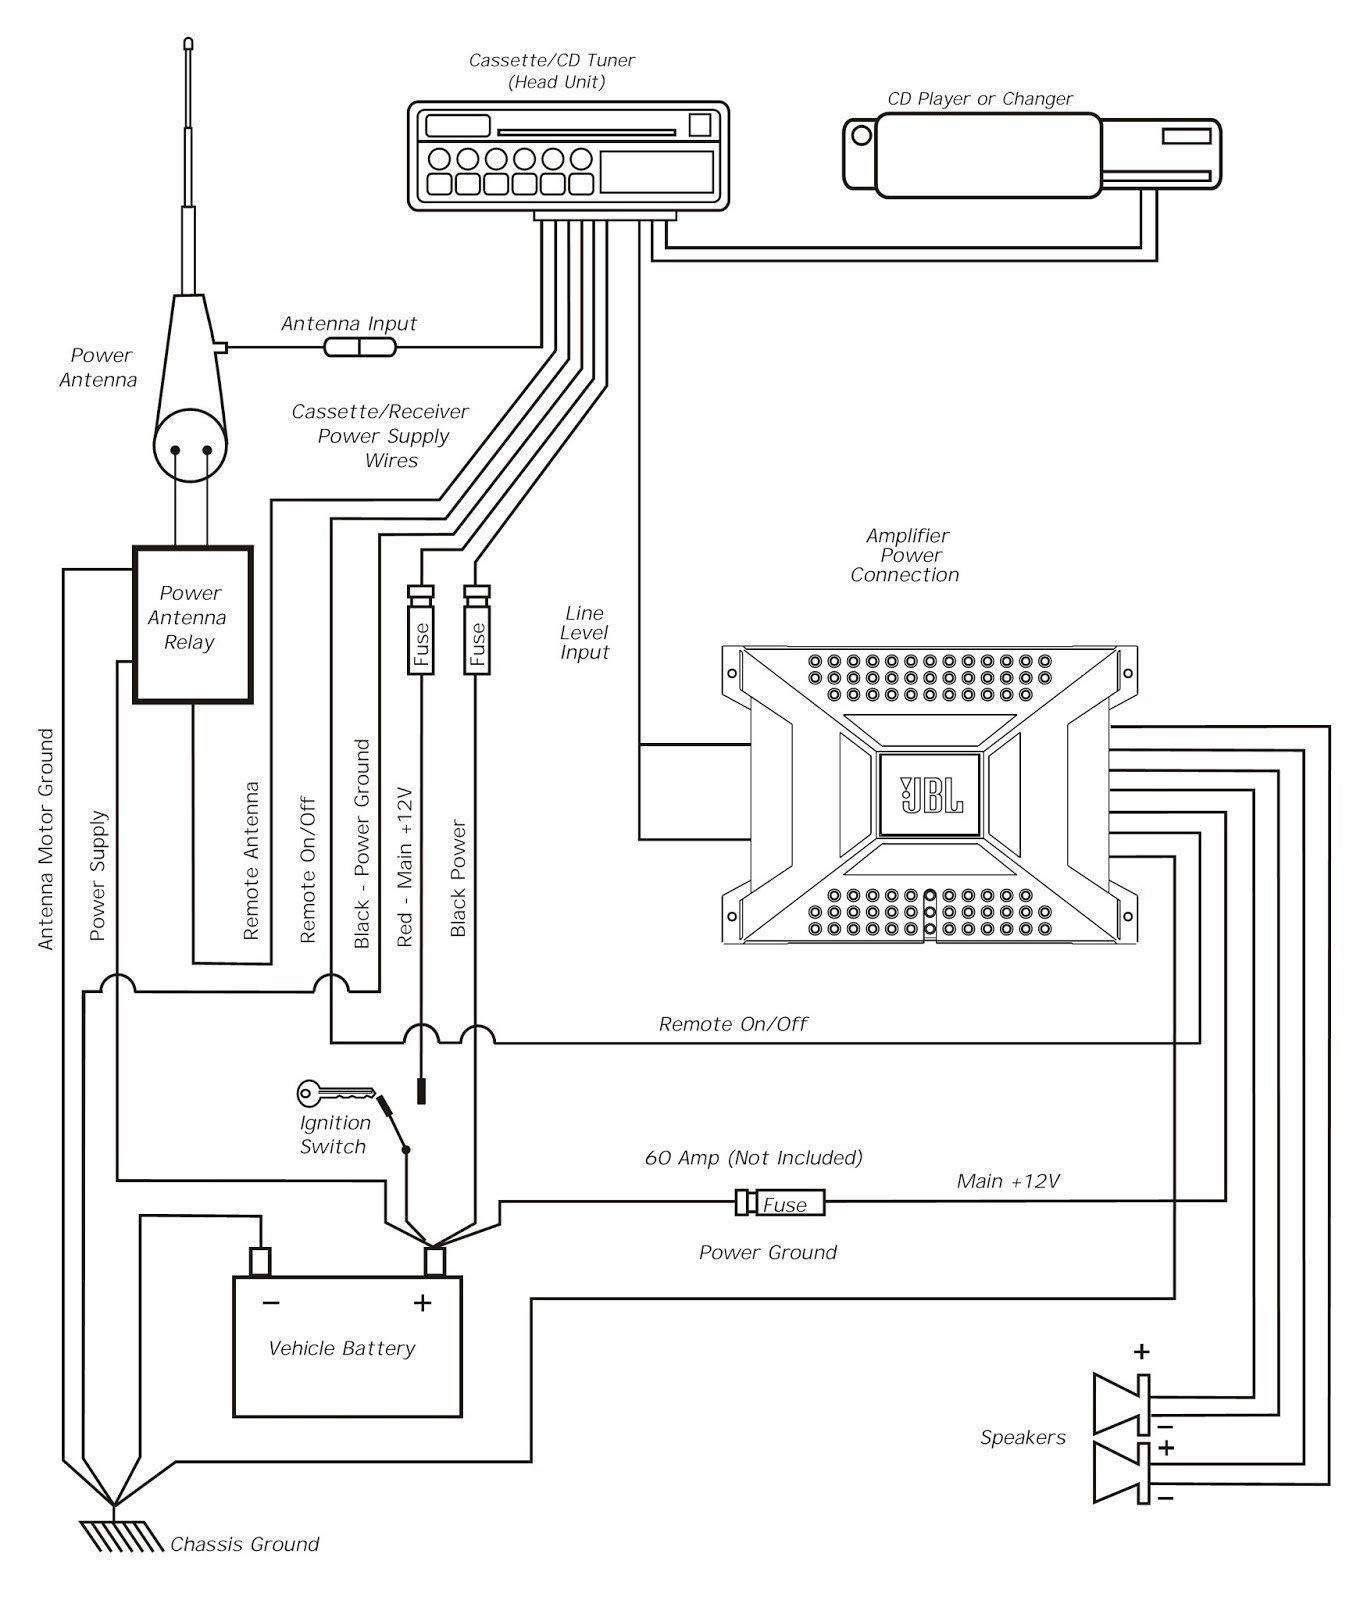 pressor Start Capacitor Wiring Diagram Inspirational Dual Capacitor Wiring Diagram New Wiring Diagram For Ac Capacitor